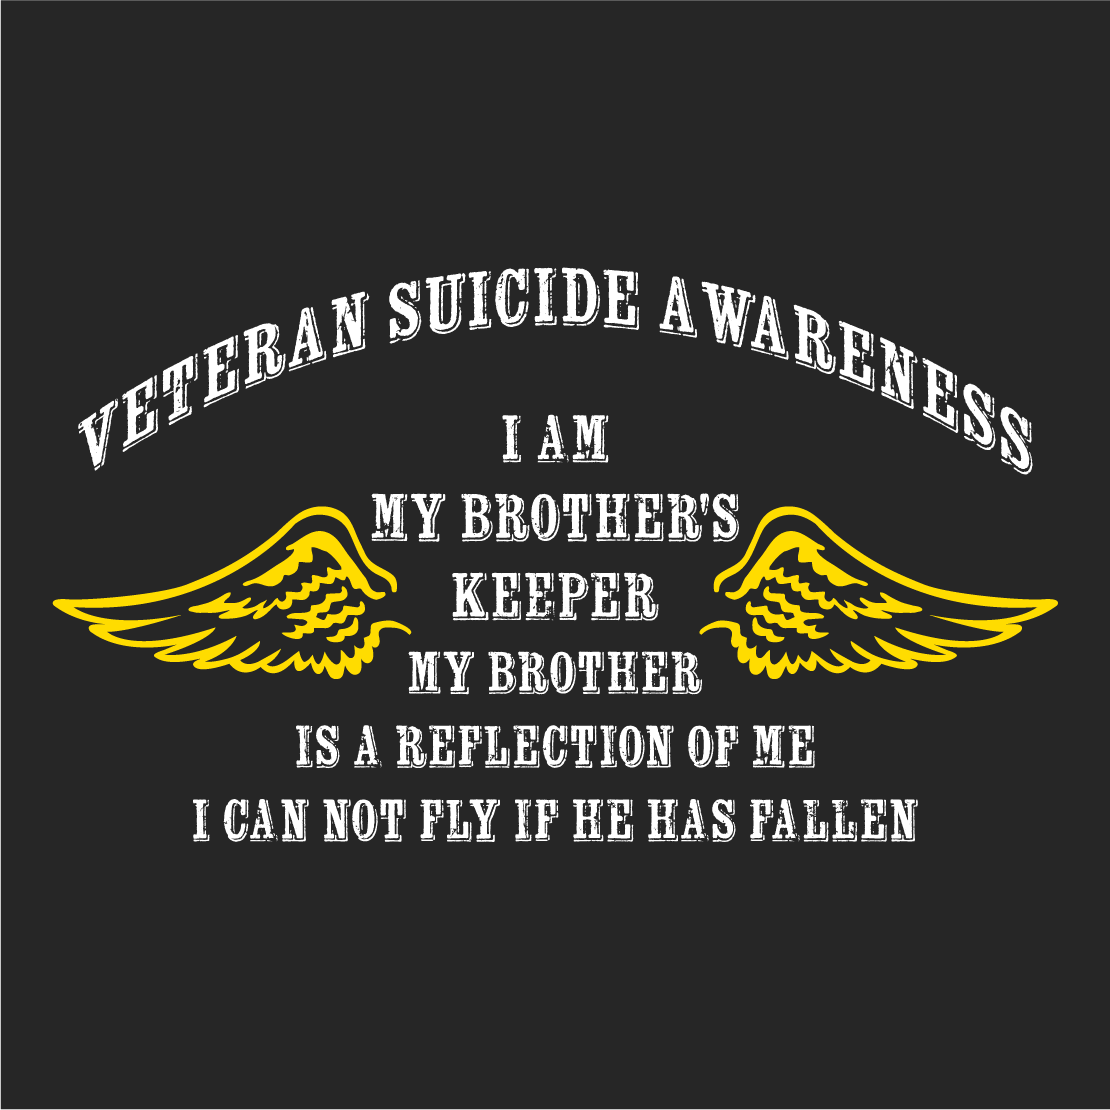 Military & Veteran Suicide Awareness shirt design - zoomed